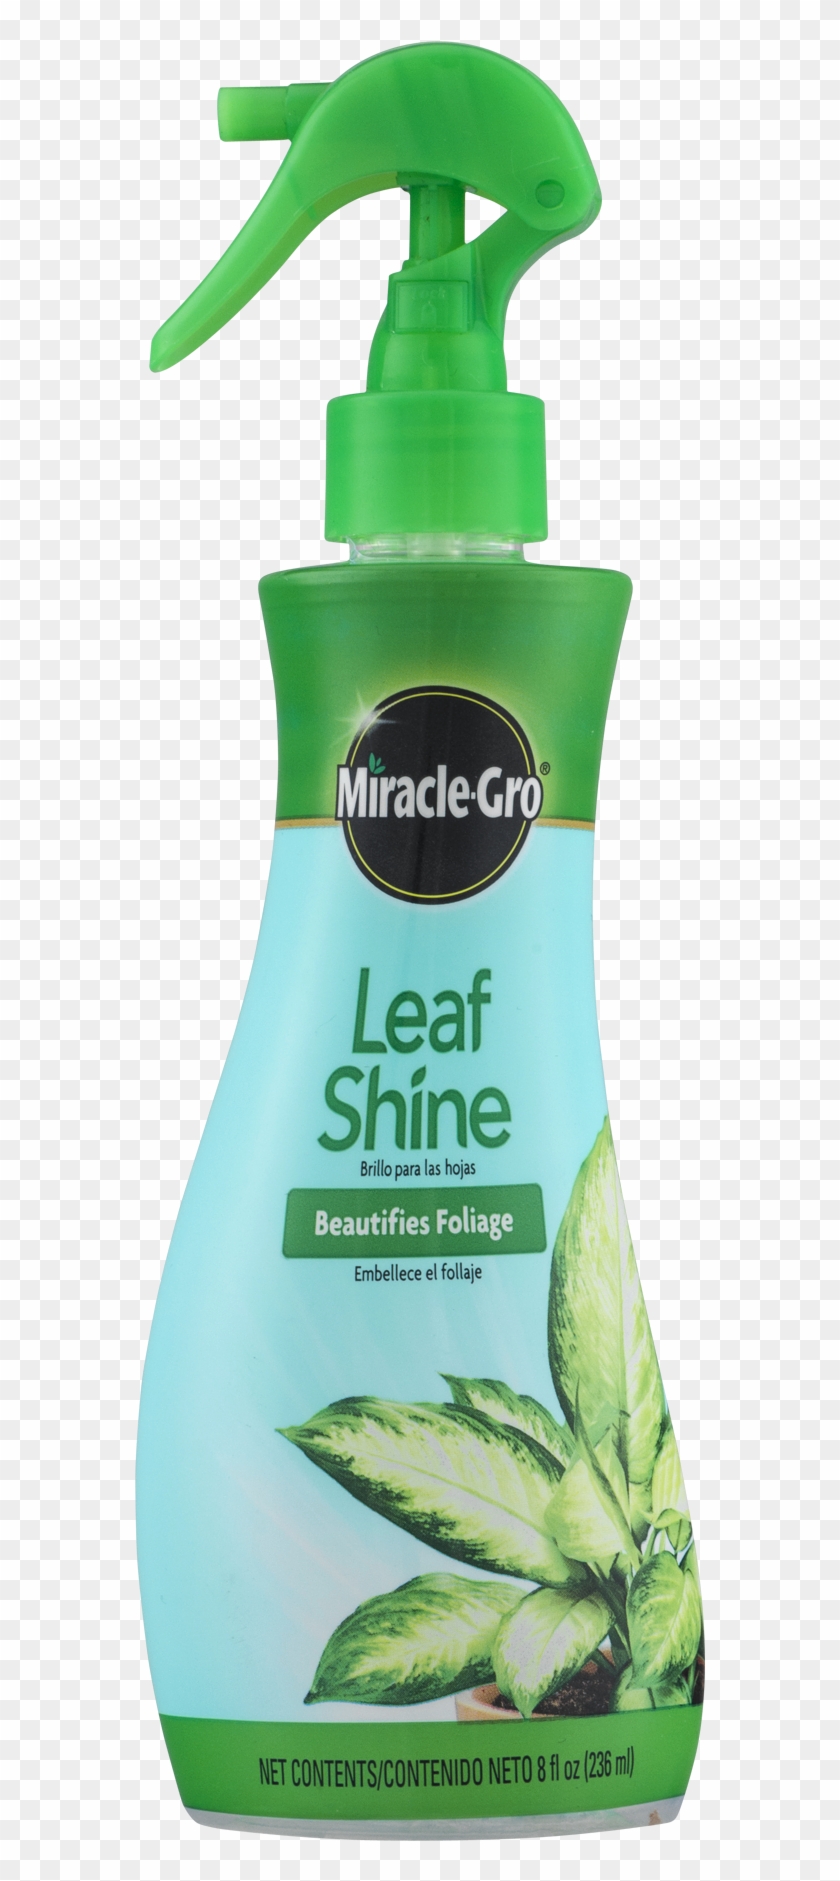 Miracle-gro Leaf Shine 8 Oz Spray Bottle - Miracle Gro Leaf Shine Clipart #2556790